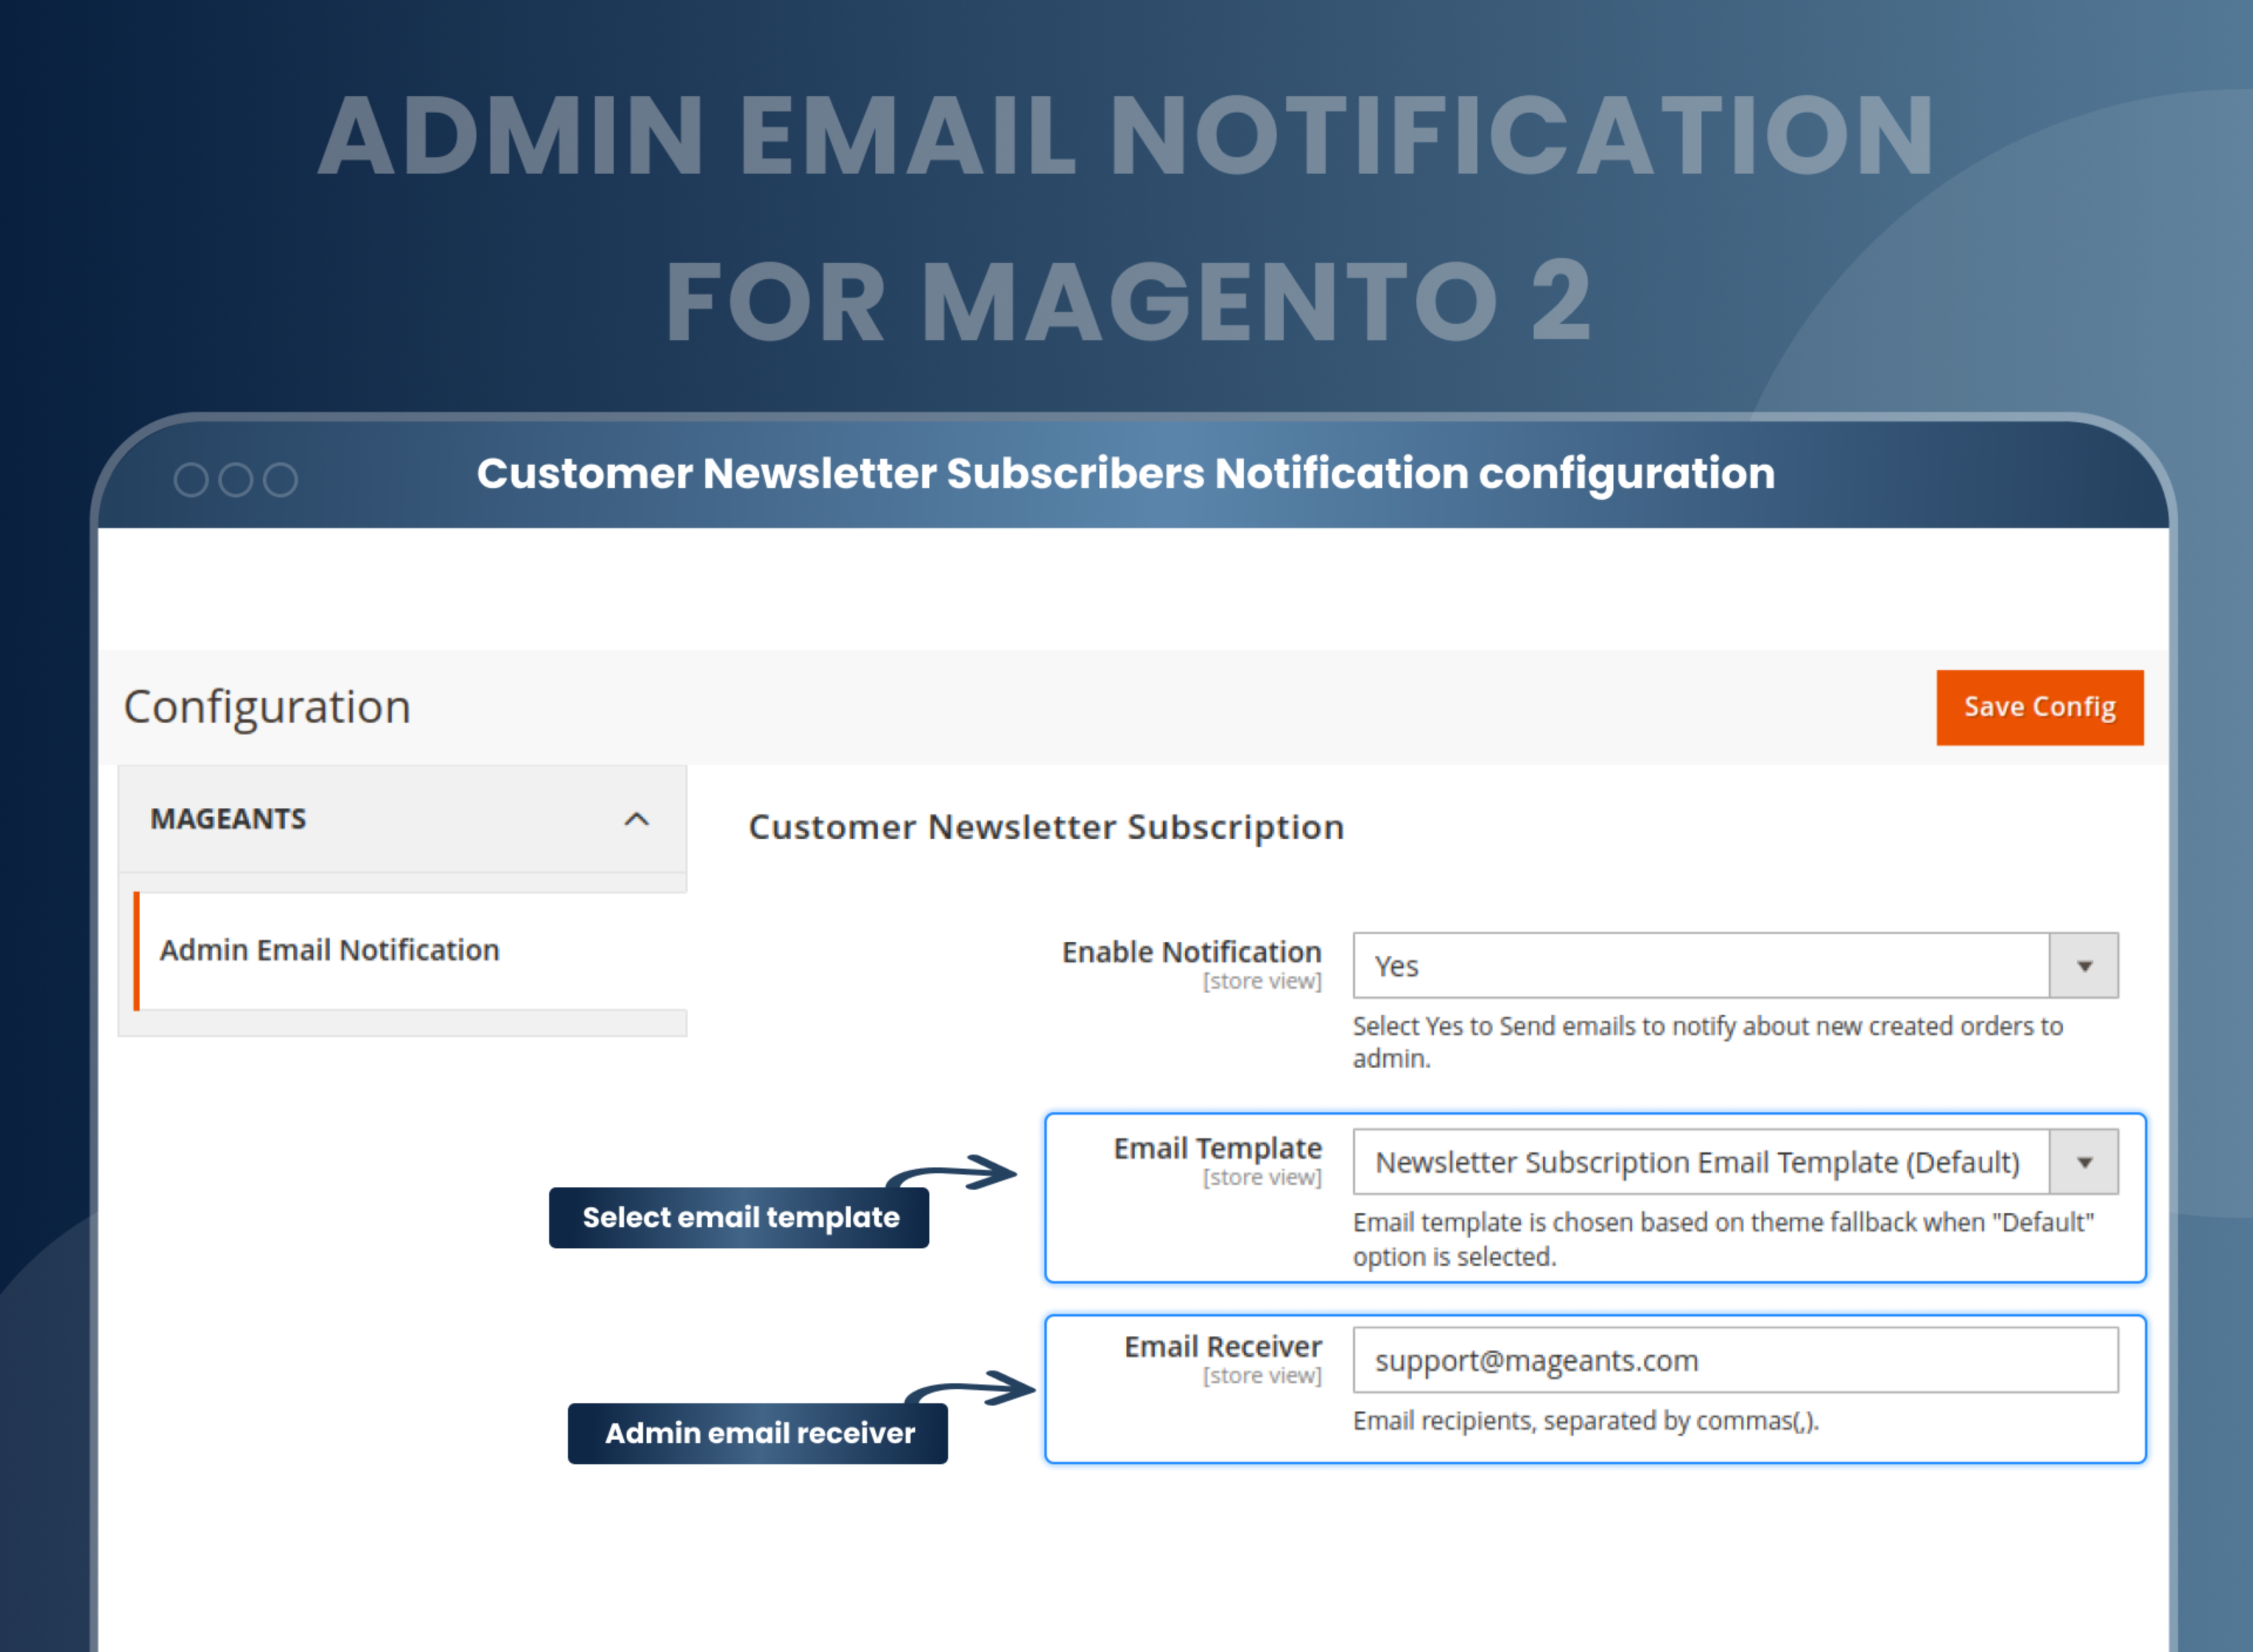 Customer Newsletter Subscribers Notification configuration